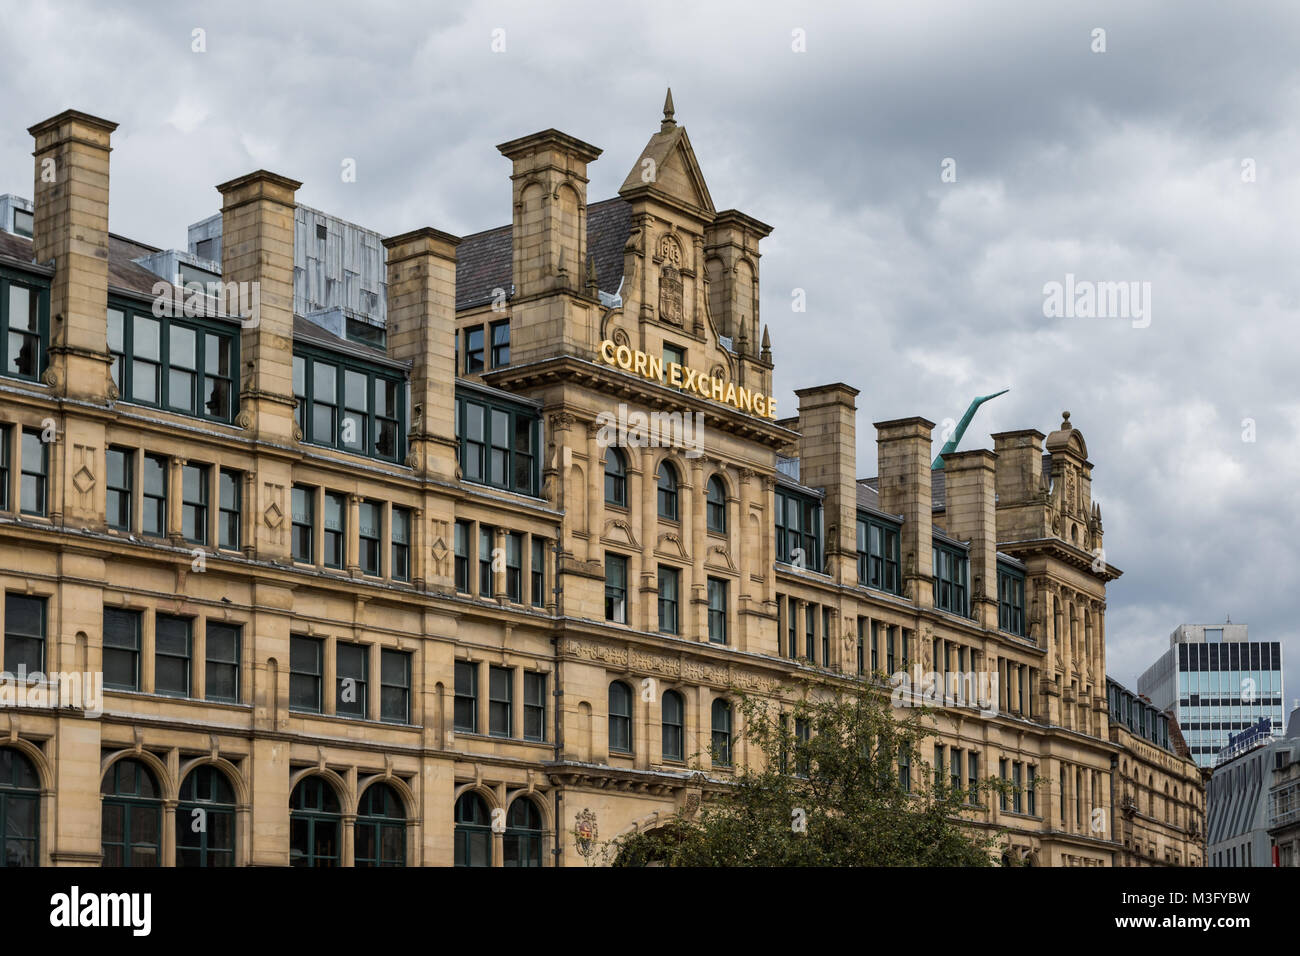 Corn Exchange Gebäude, Manchester, UK Stockfoto